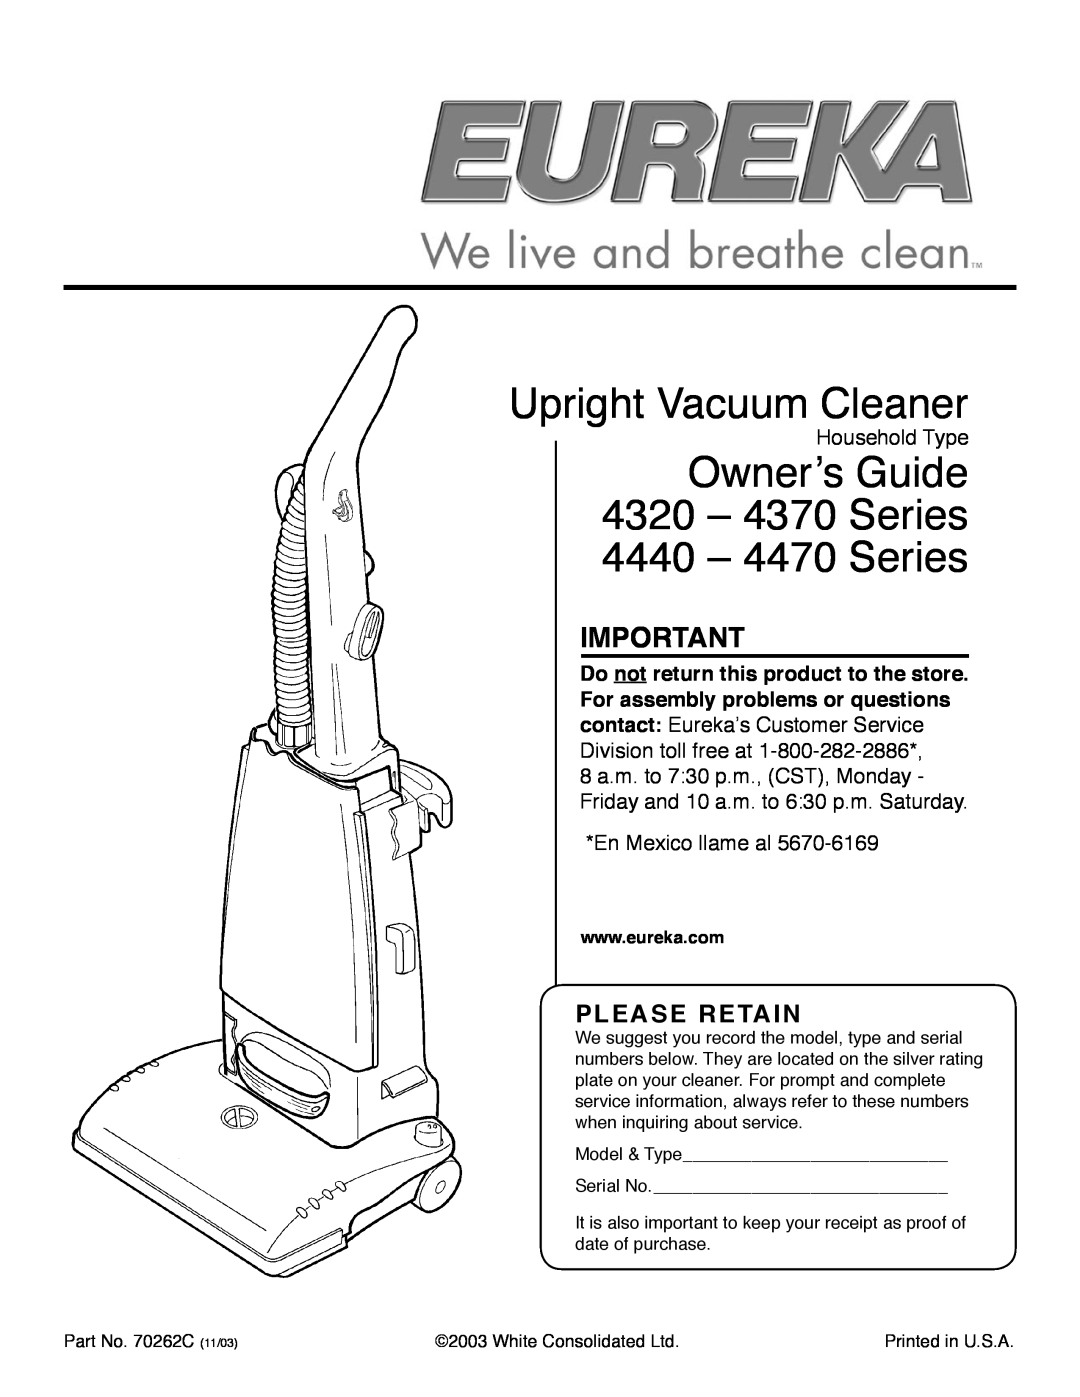 Eureka 4440 -4470 manual Please Retain, Upright Vacuum Cleaner, Ownerʼs Guide 4320 - 4370 Series 4440 - 4470 Series 